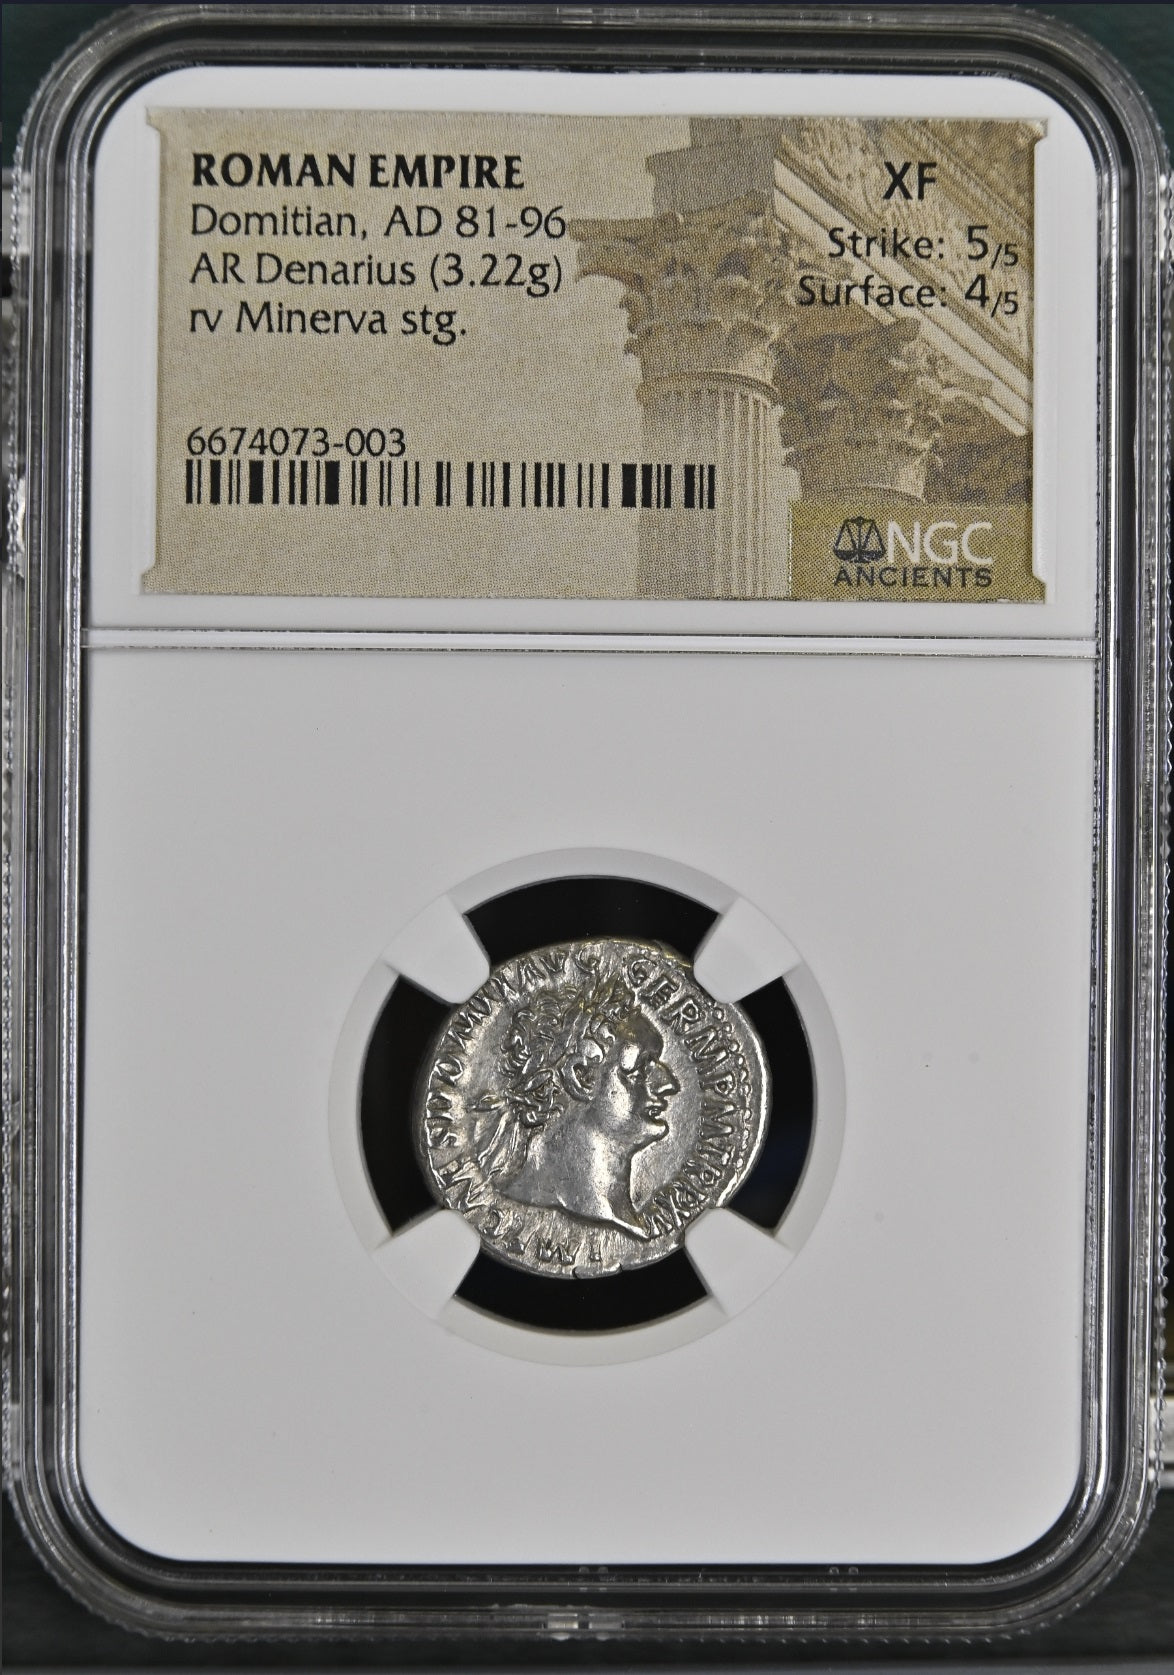 Roman Empire - Domitian - Silver Denarius - NGC XF - RIC:773